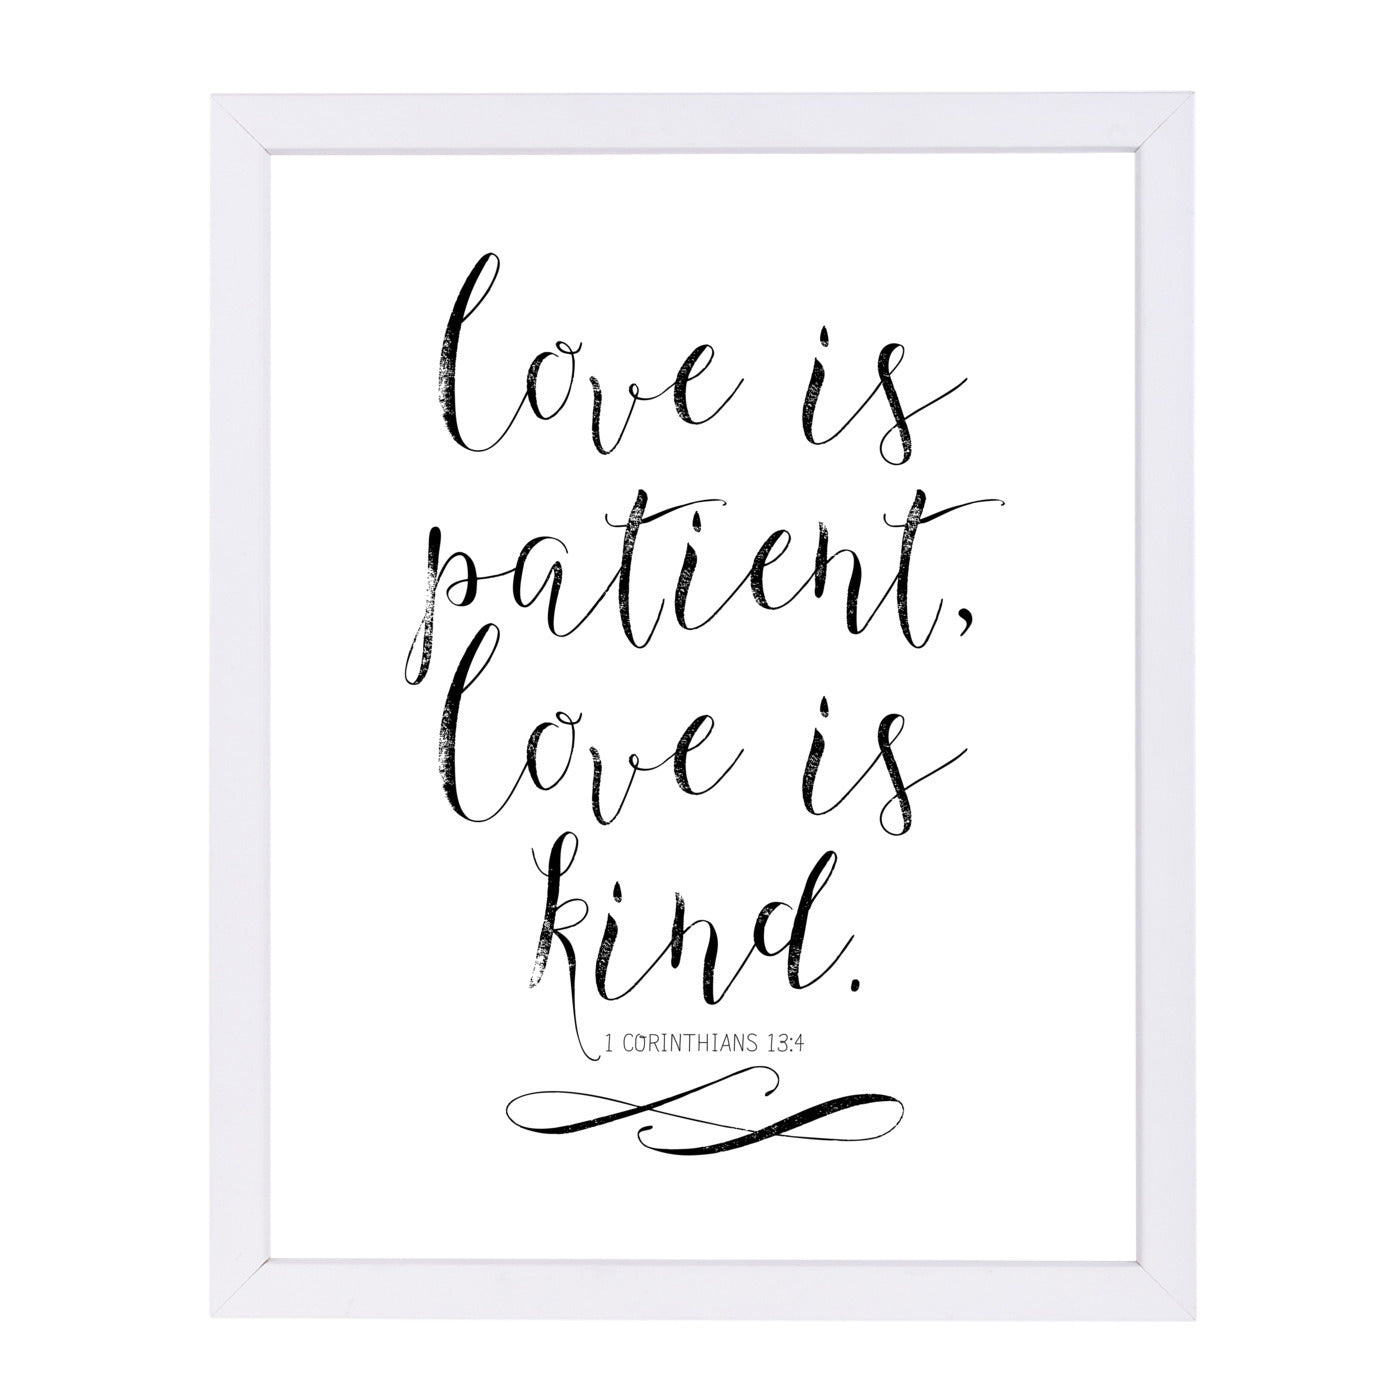 Love Is Patient Love Is Kind Chalkboard 01 by Amy Brinkman Framed Print - Americanflat